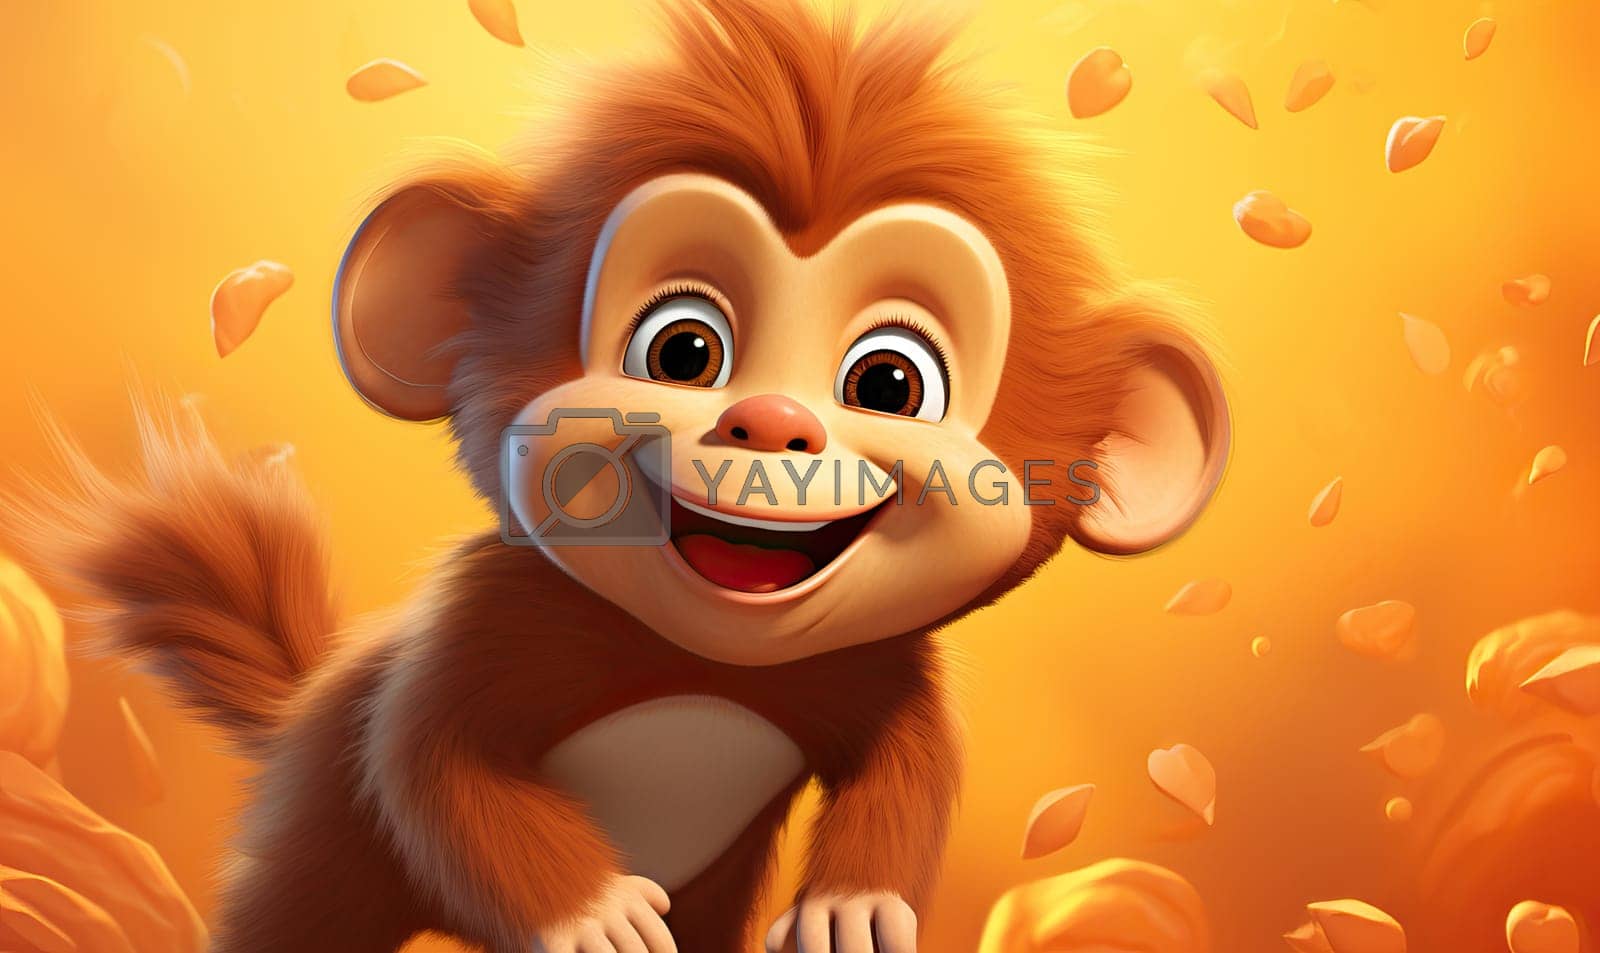 Royalty free image of Cartoon animal monkey on an orange background. by Fischeron